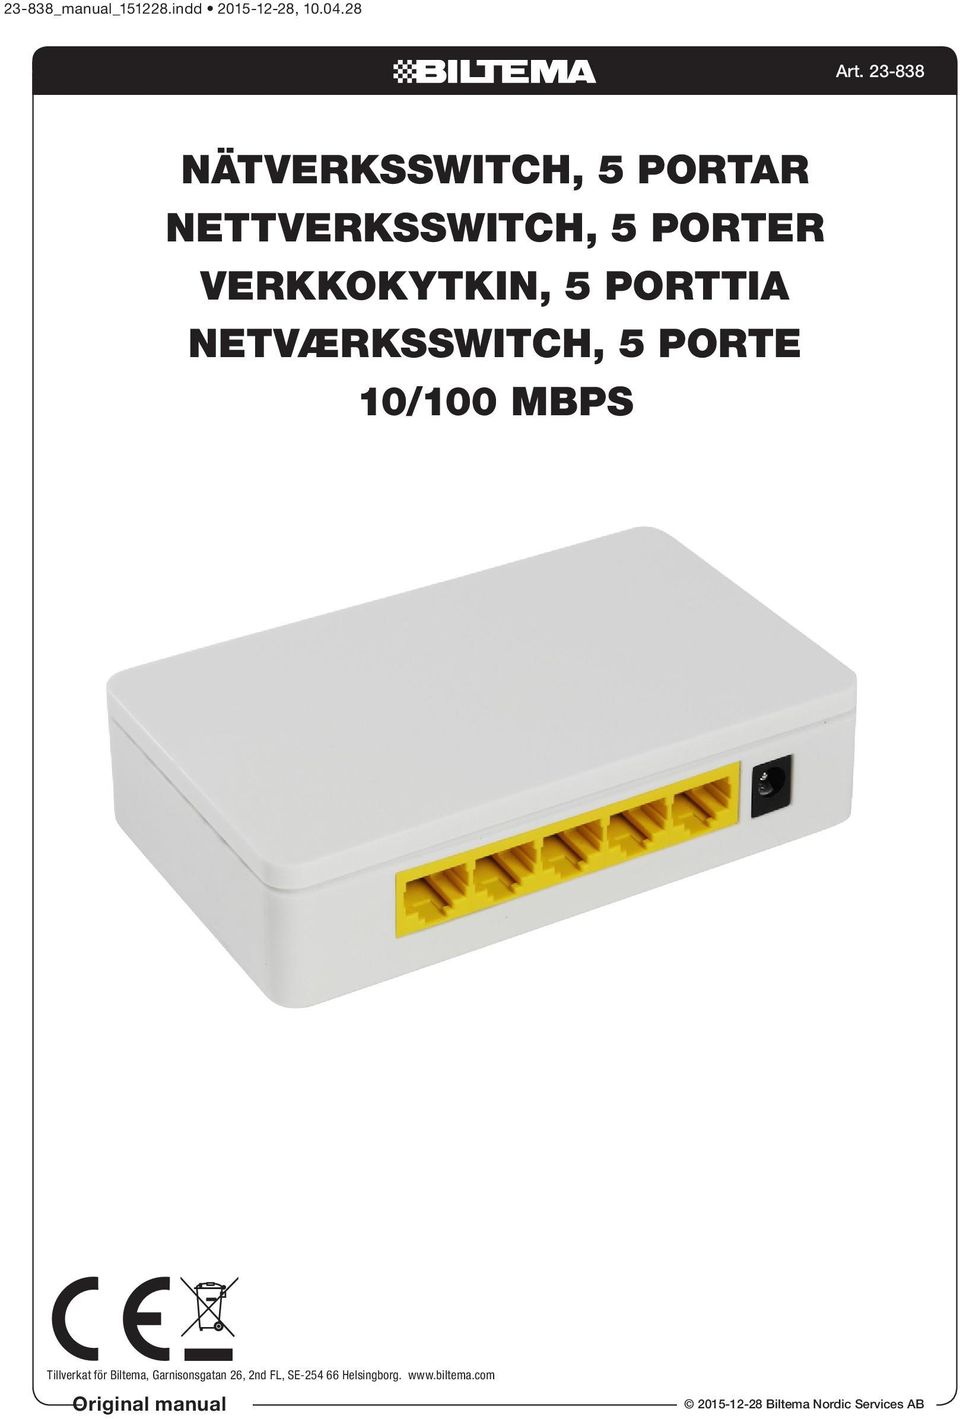 PORTTIA NETVÆRKSSWITCH, 5 PORTE 10/100 MBPS Tillverkat för Biltema,